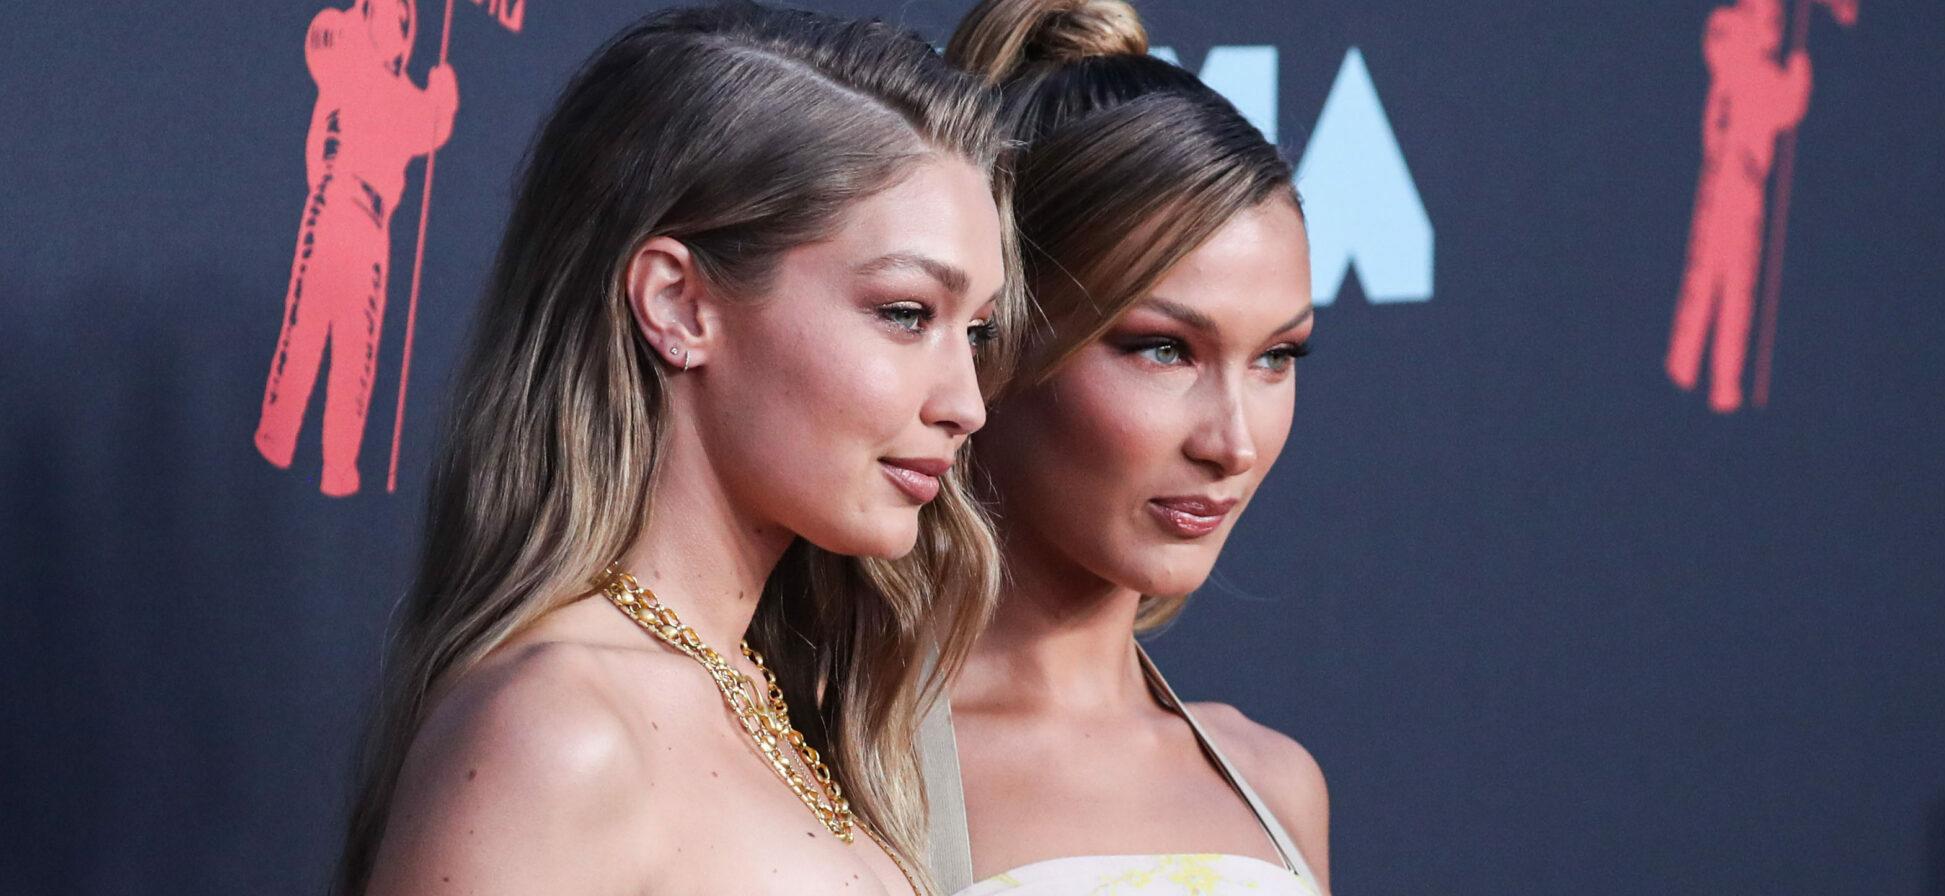 Gigi Hadid and sister Bella Hadid arrive at the 2019 MTV Video Music Awards